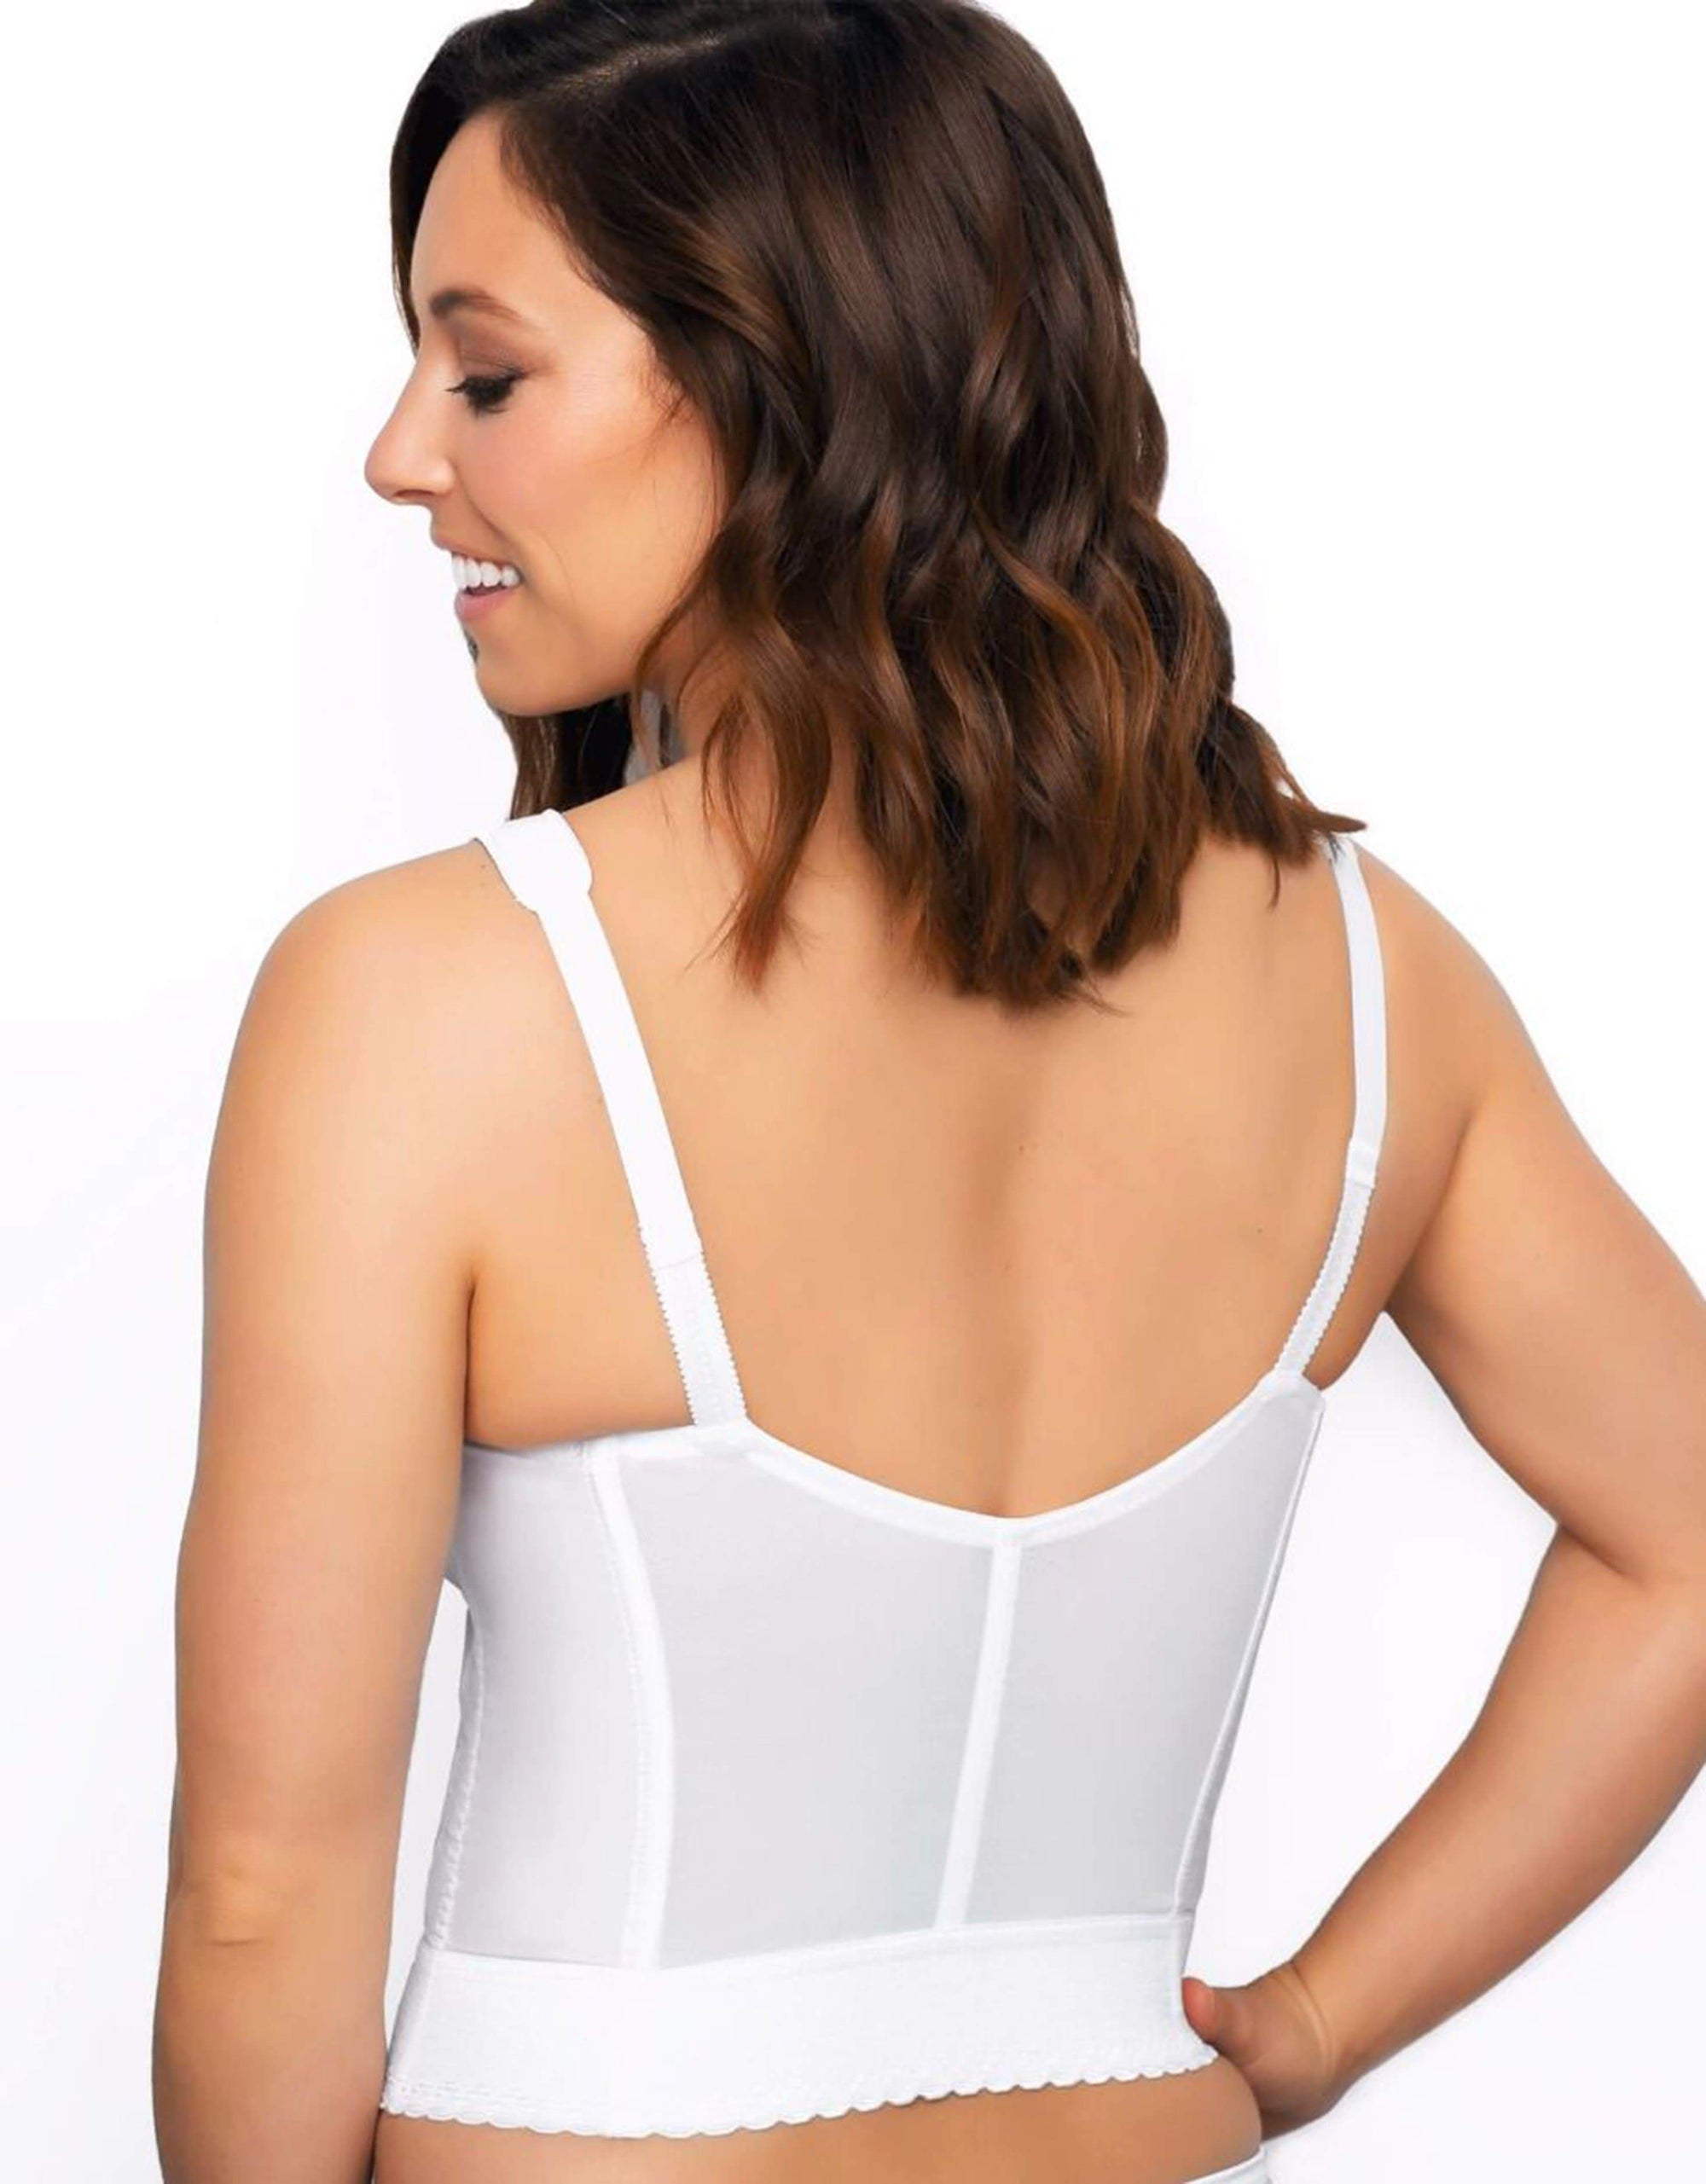 BraWorld - This longline posture bra provides perfect back